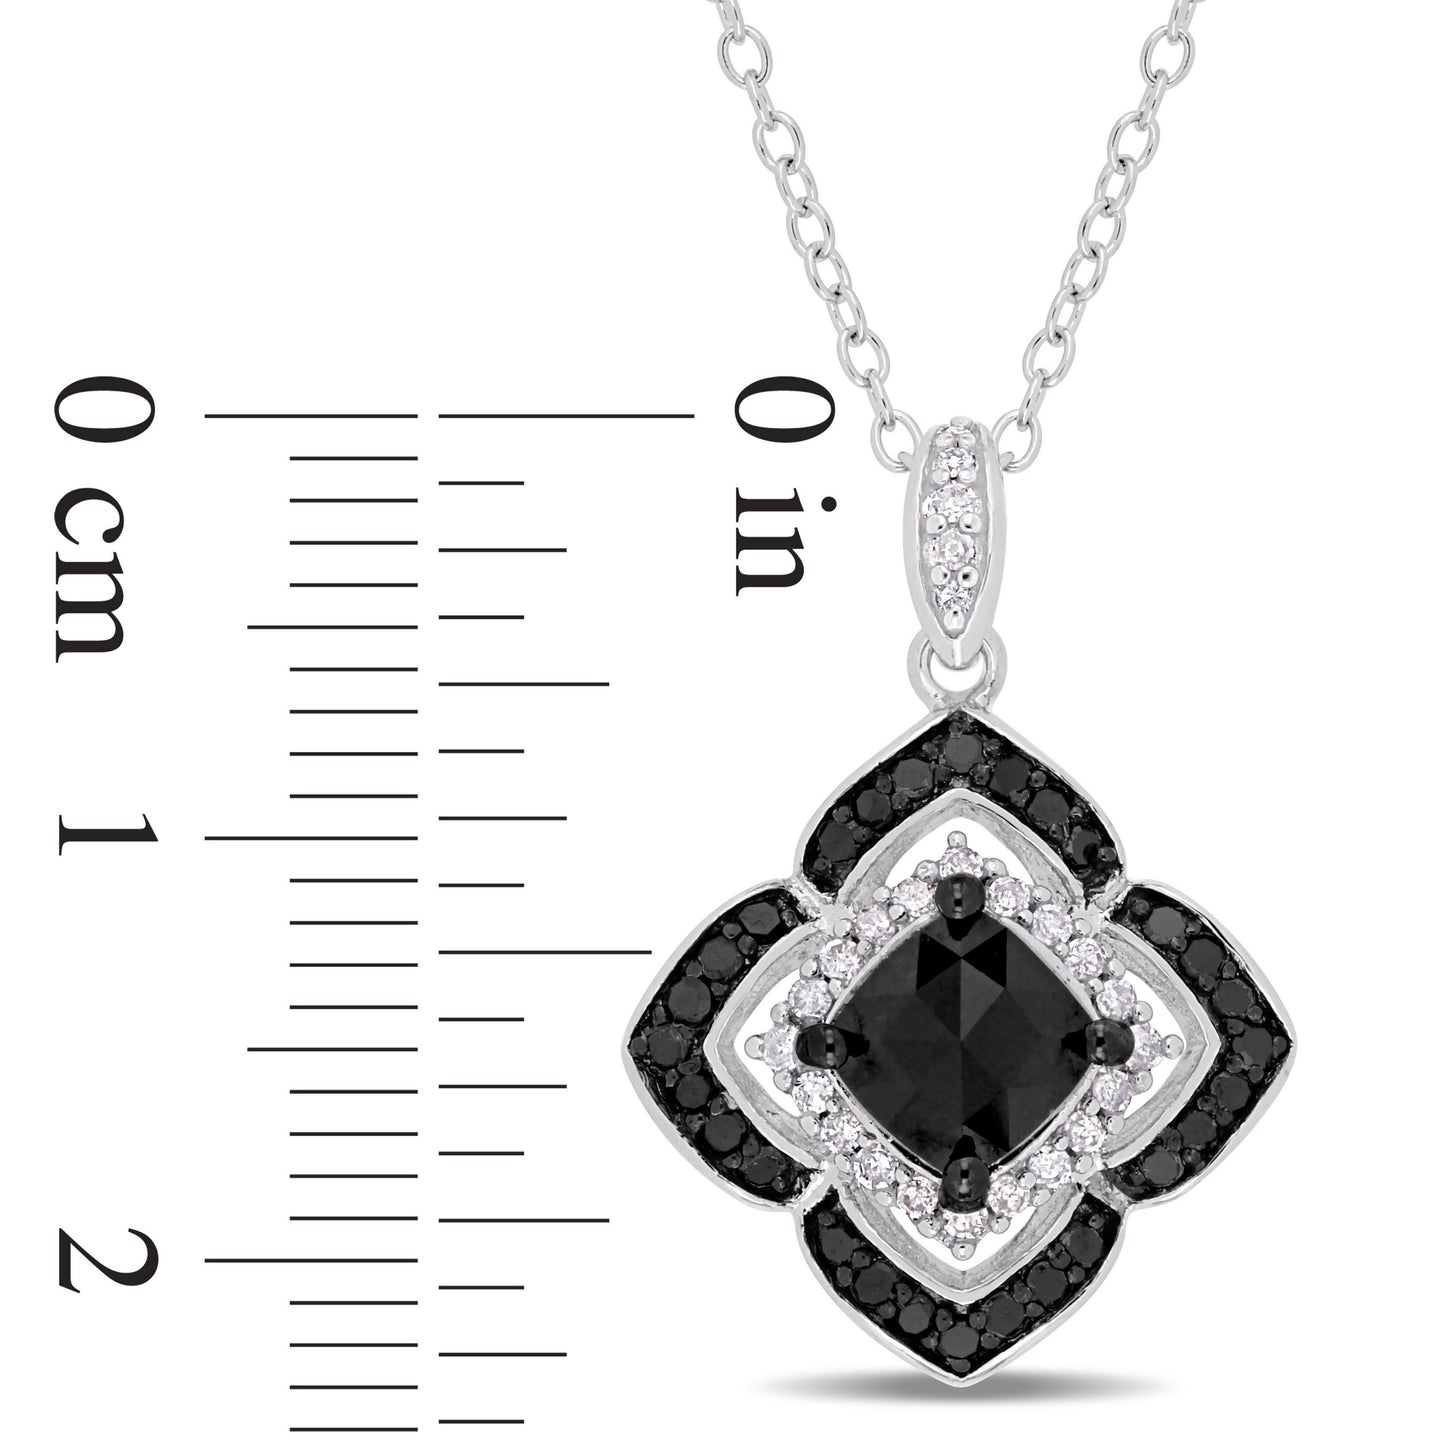 Black & White Halo Diamond Necklace in Sterling Silver